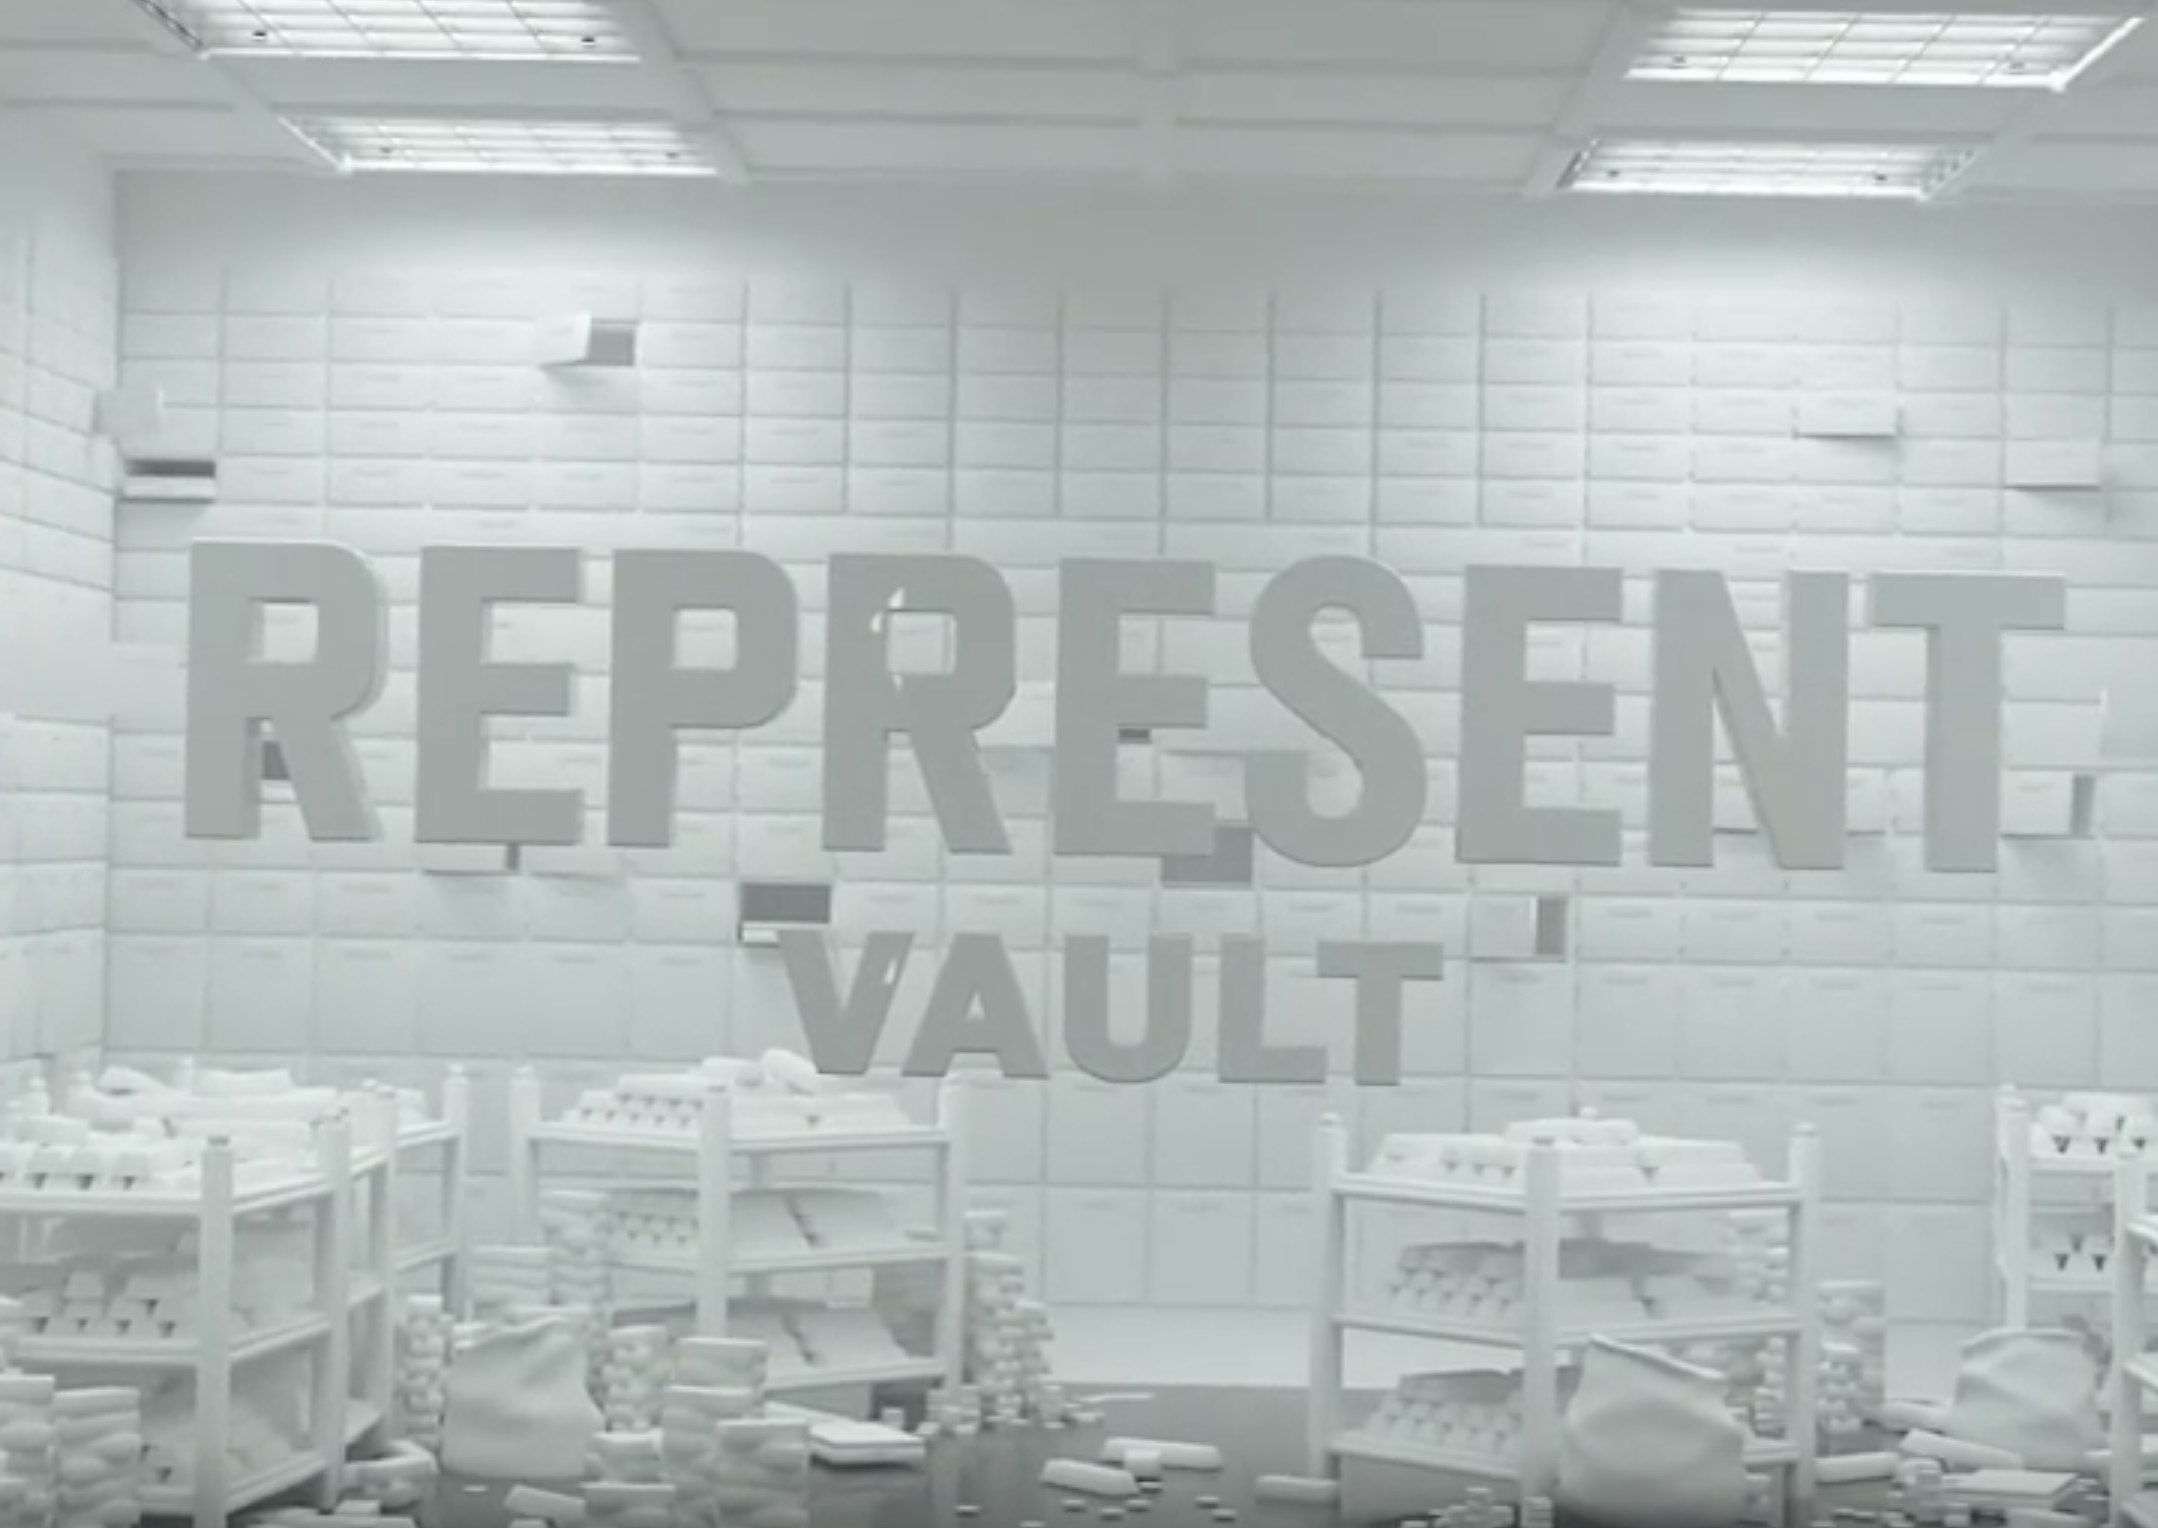 Represent - The Vault 